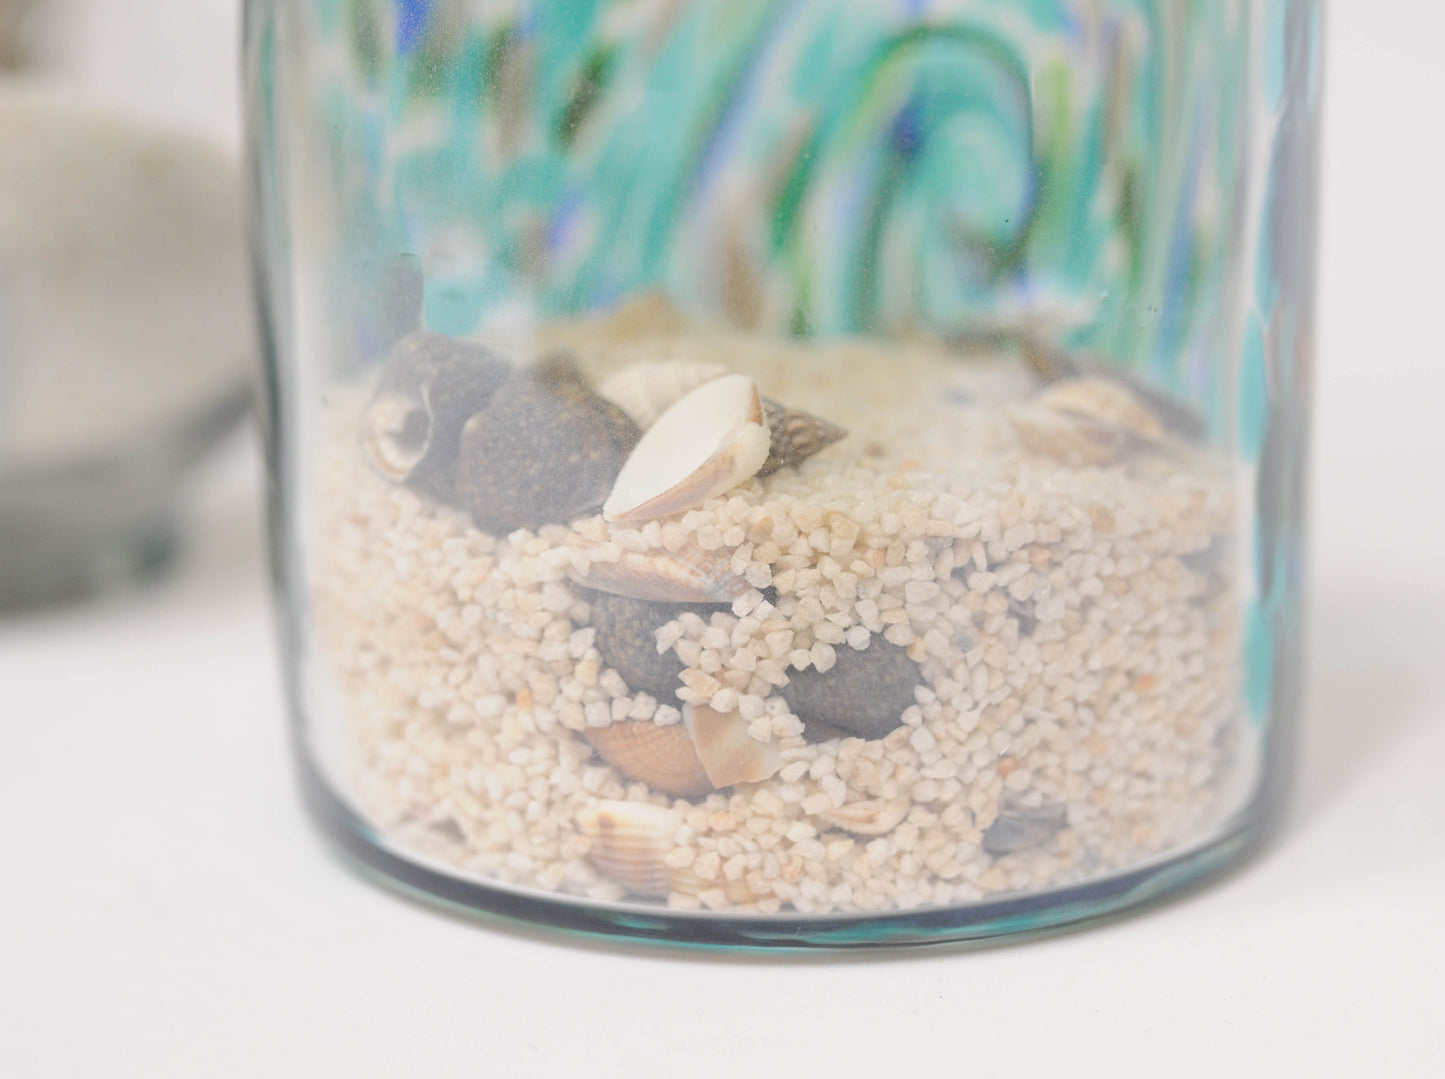 Swirled Glass Jars with Sand and Seashells